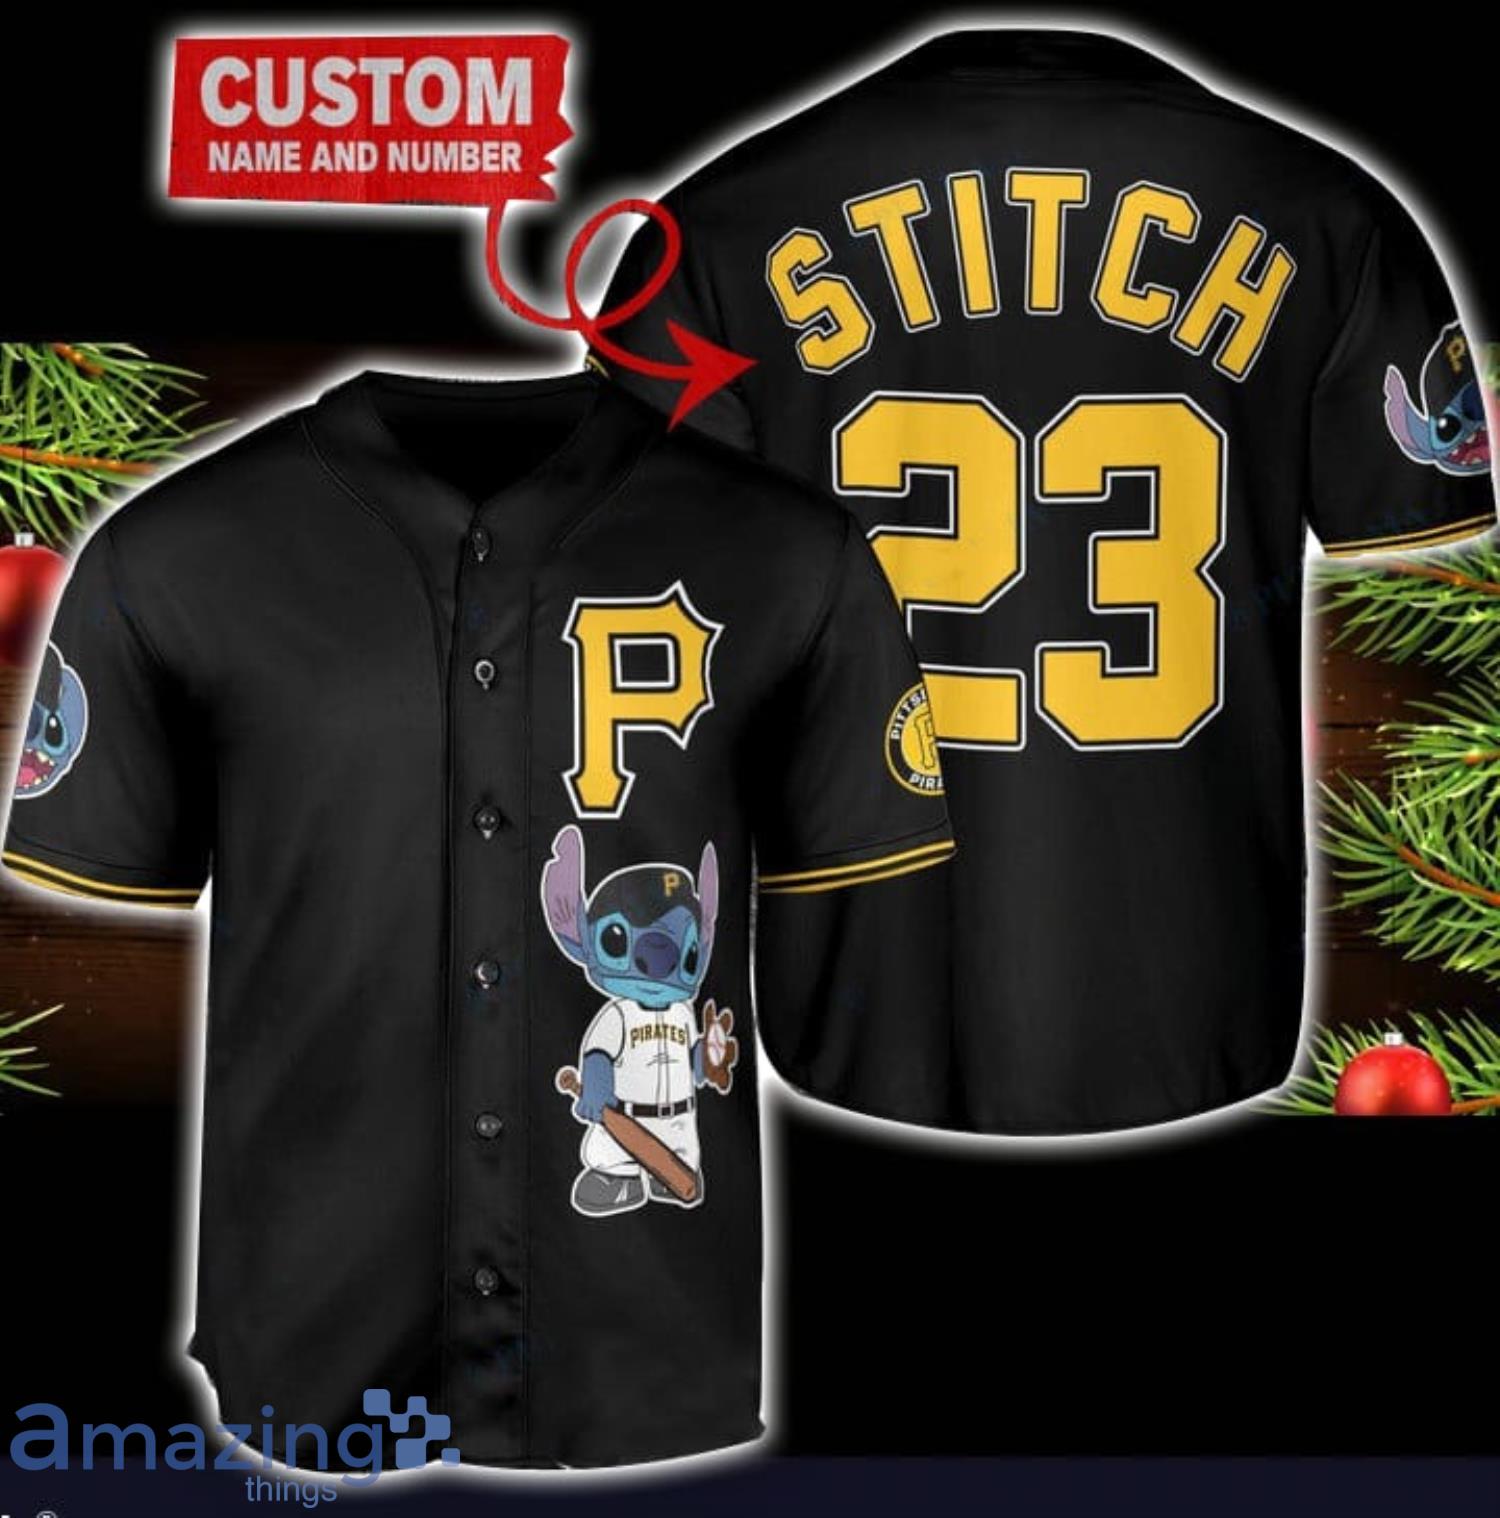 Pittsburgh Pirates Personalized Name MLB Fans Stitch Baseball